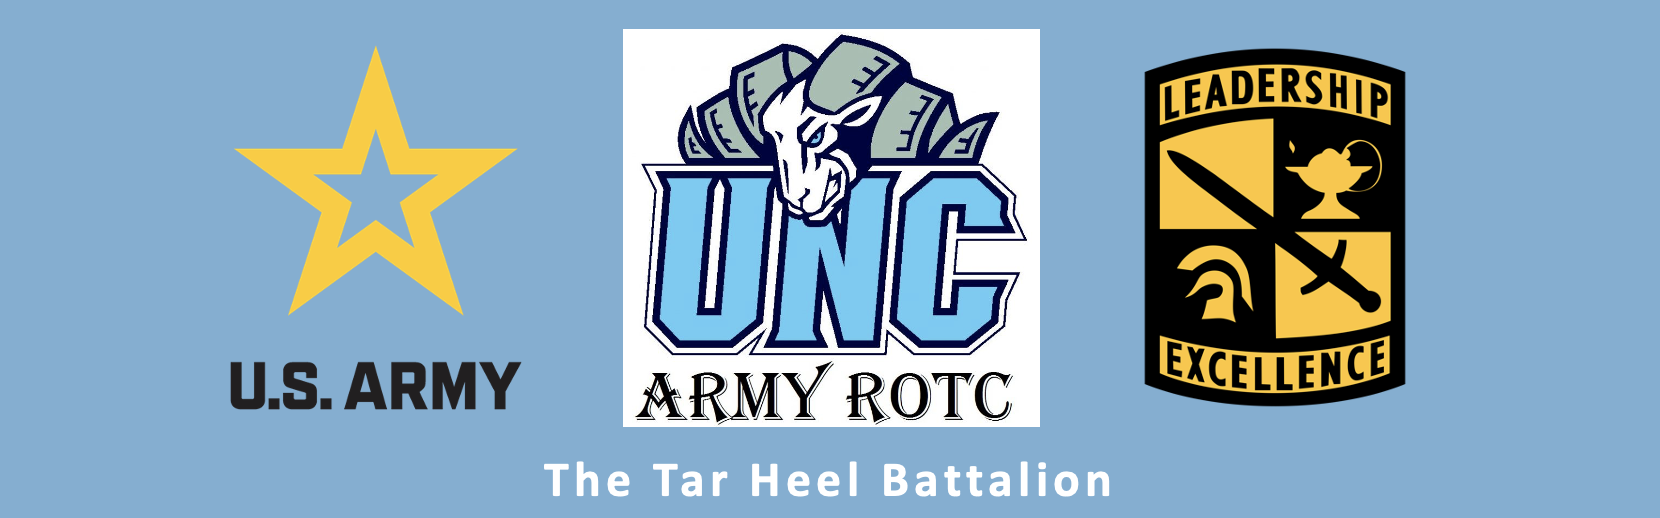 UNC Army ROTC